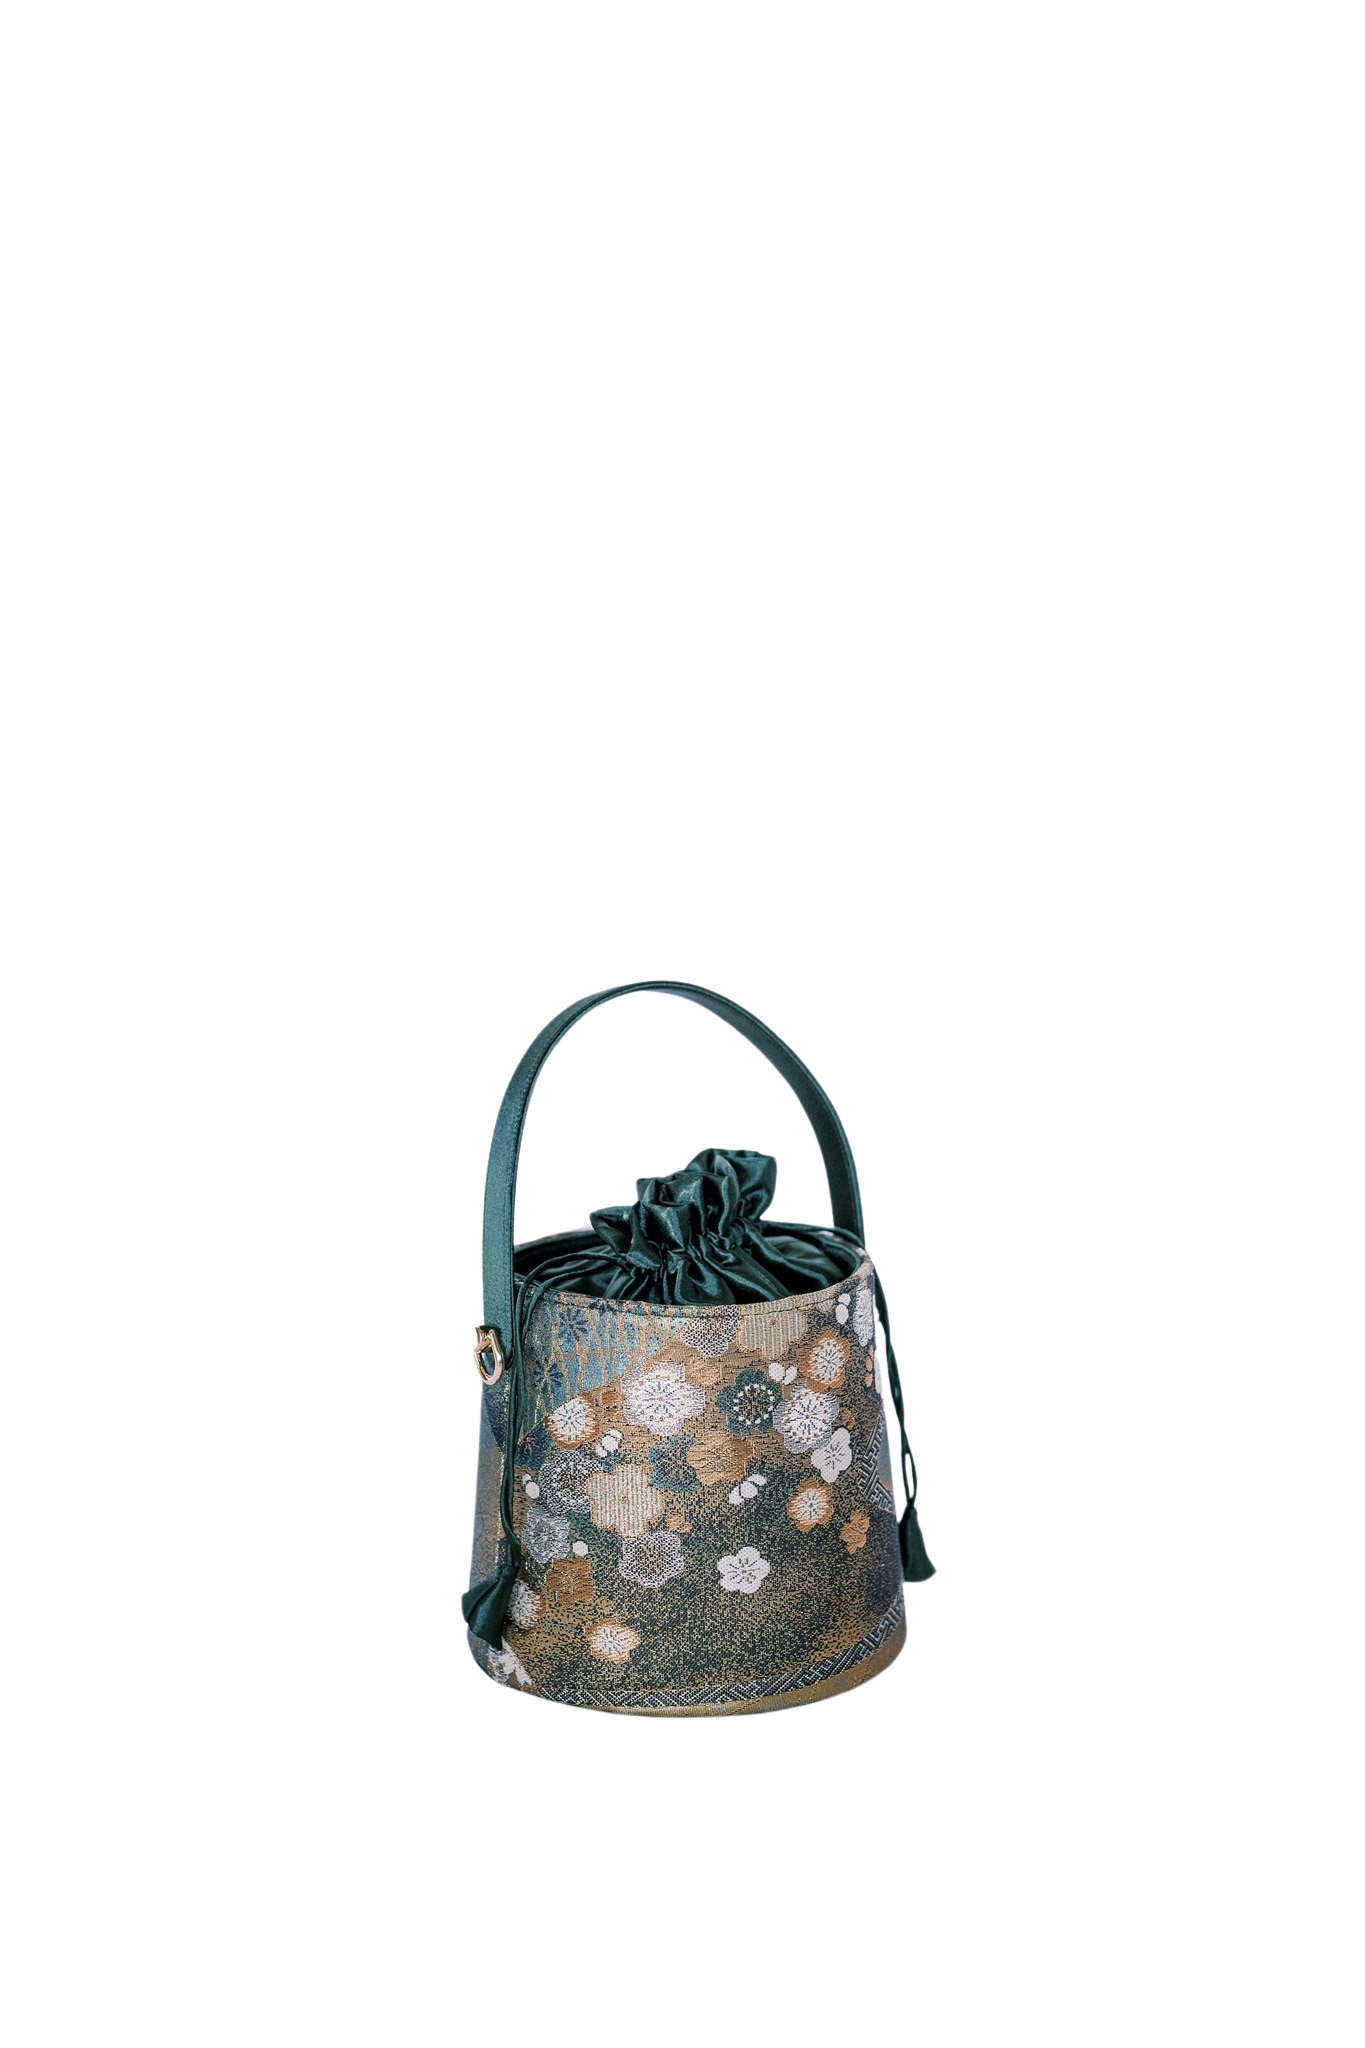 Jinza Oriental Couture Handbags Wedding Accessories | Modern Bucket Handbags in Vintage Green for Your Bridal Party